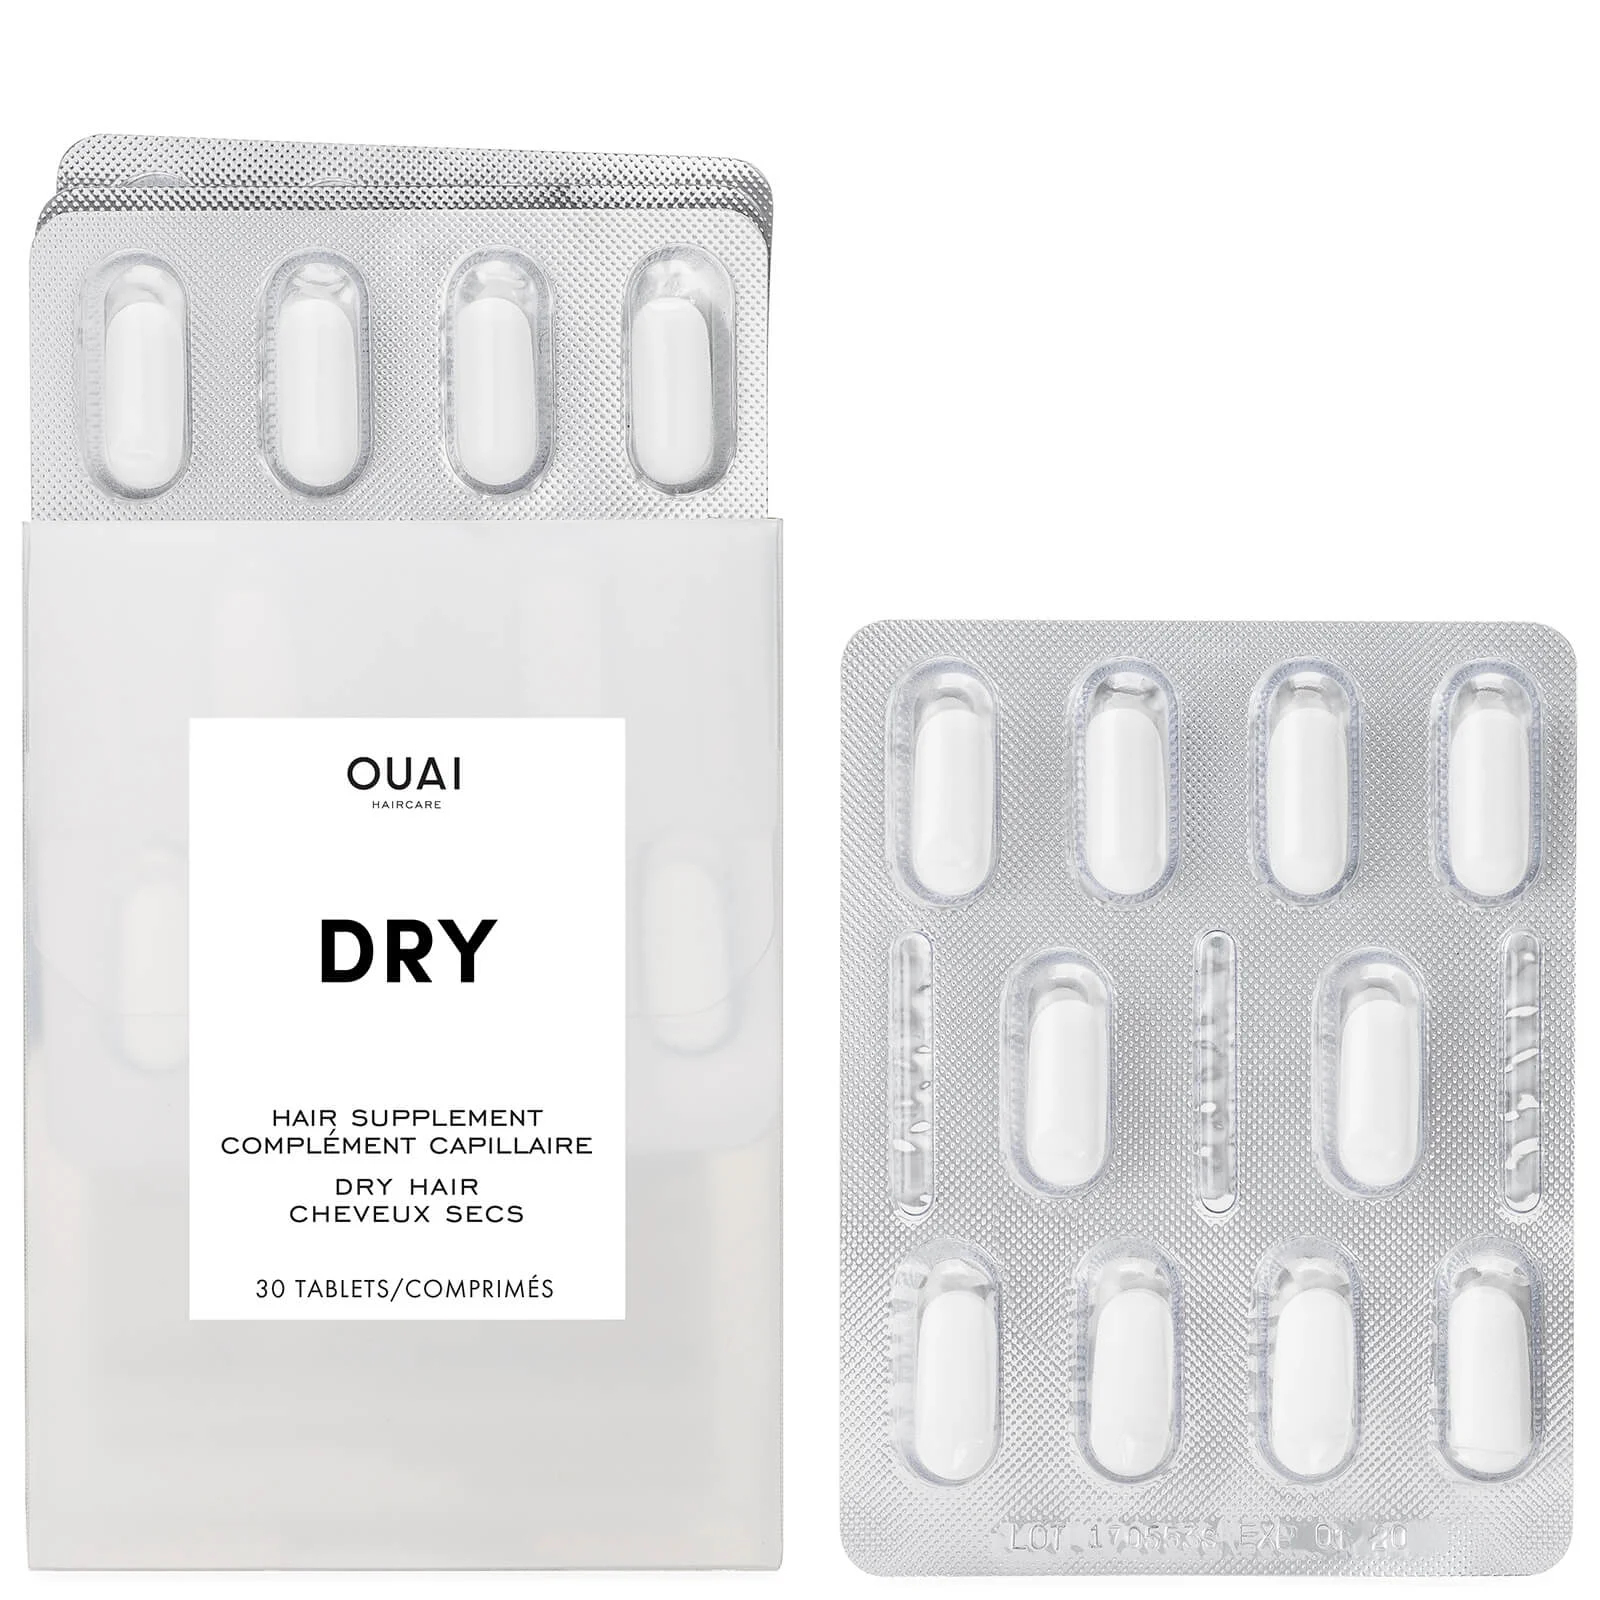 OUAI Dry Hair Supplement Image 1